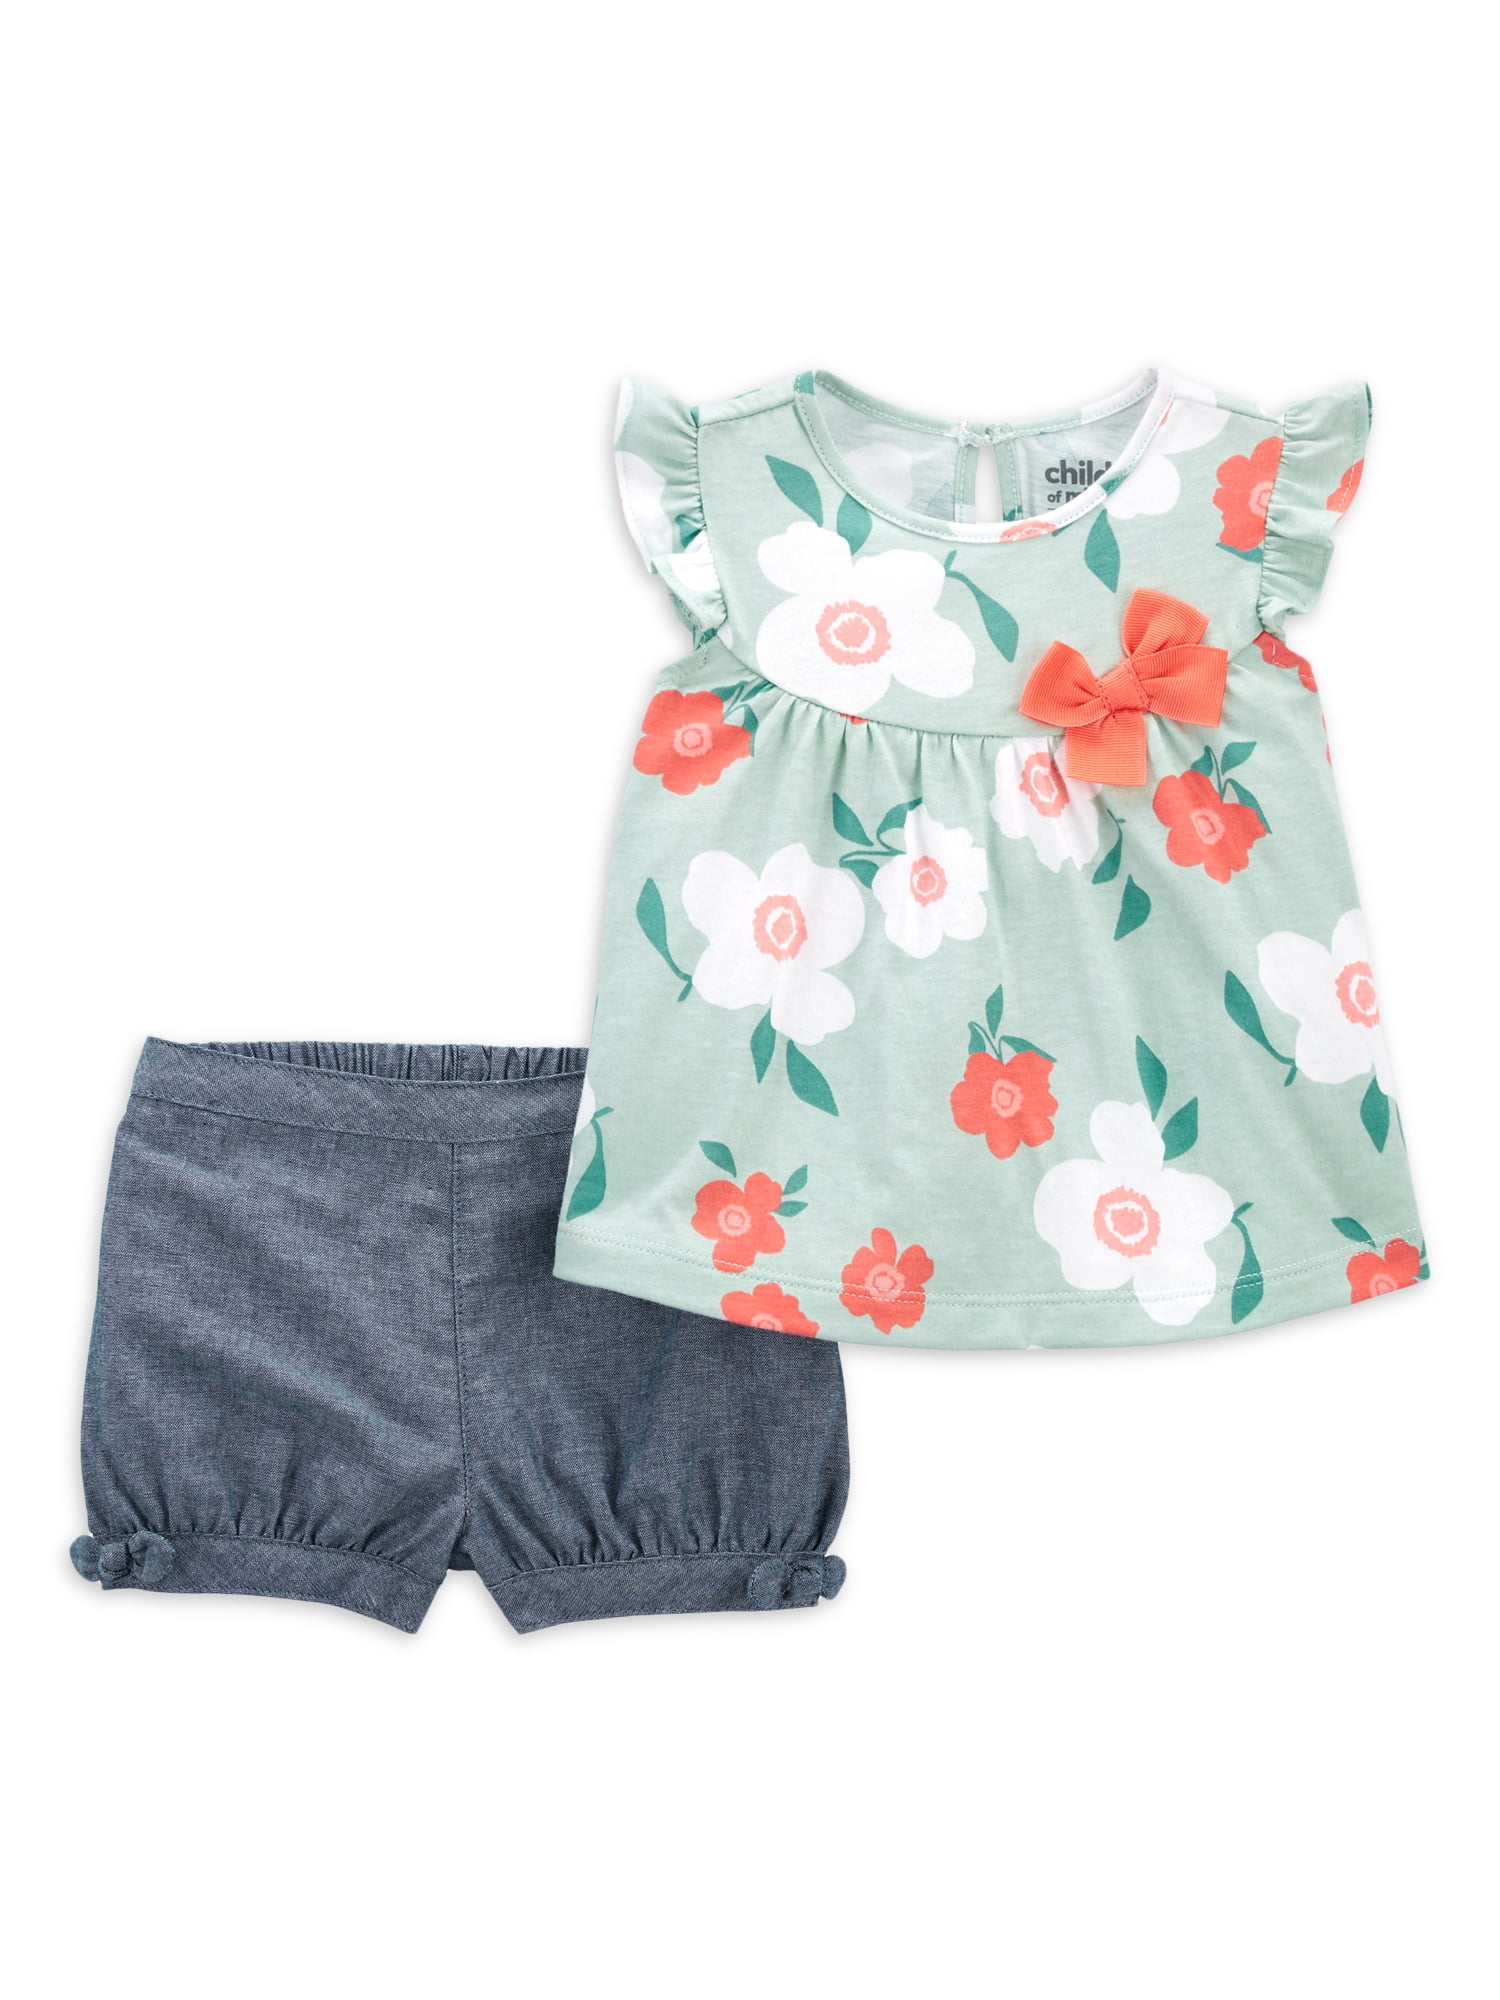 Carter's Child of Mine Baby Girl Top & Shorts, 2pc set (0/3M-24M) -  Walmart.com